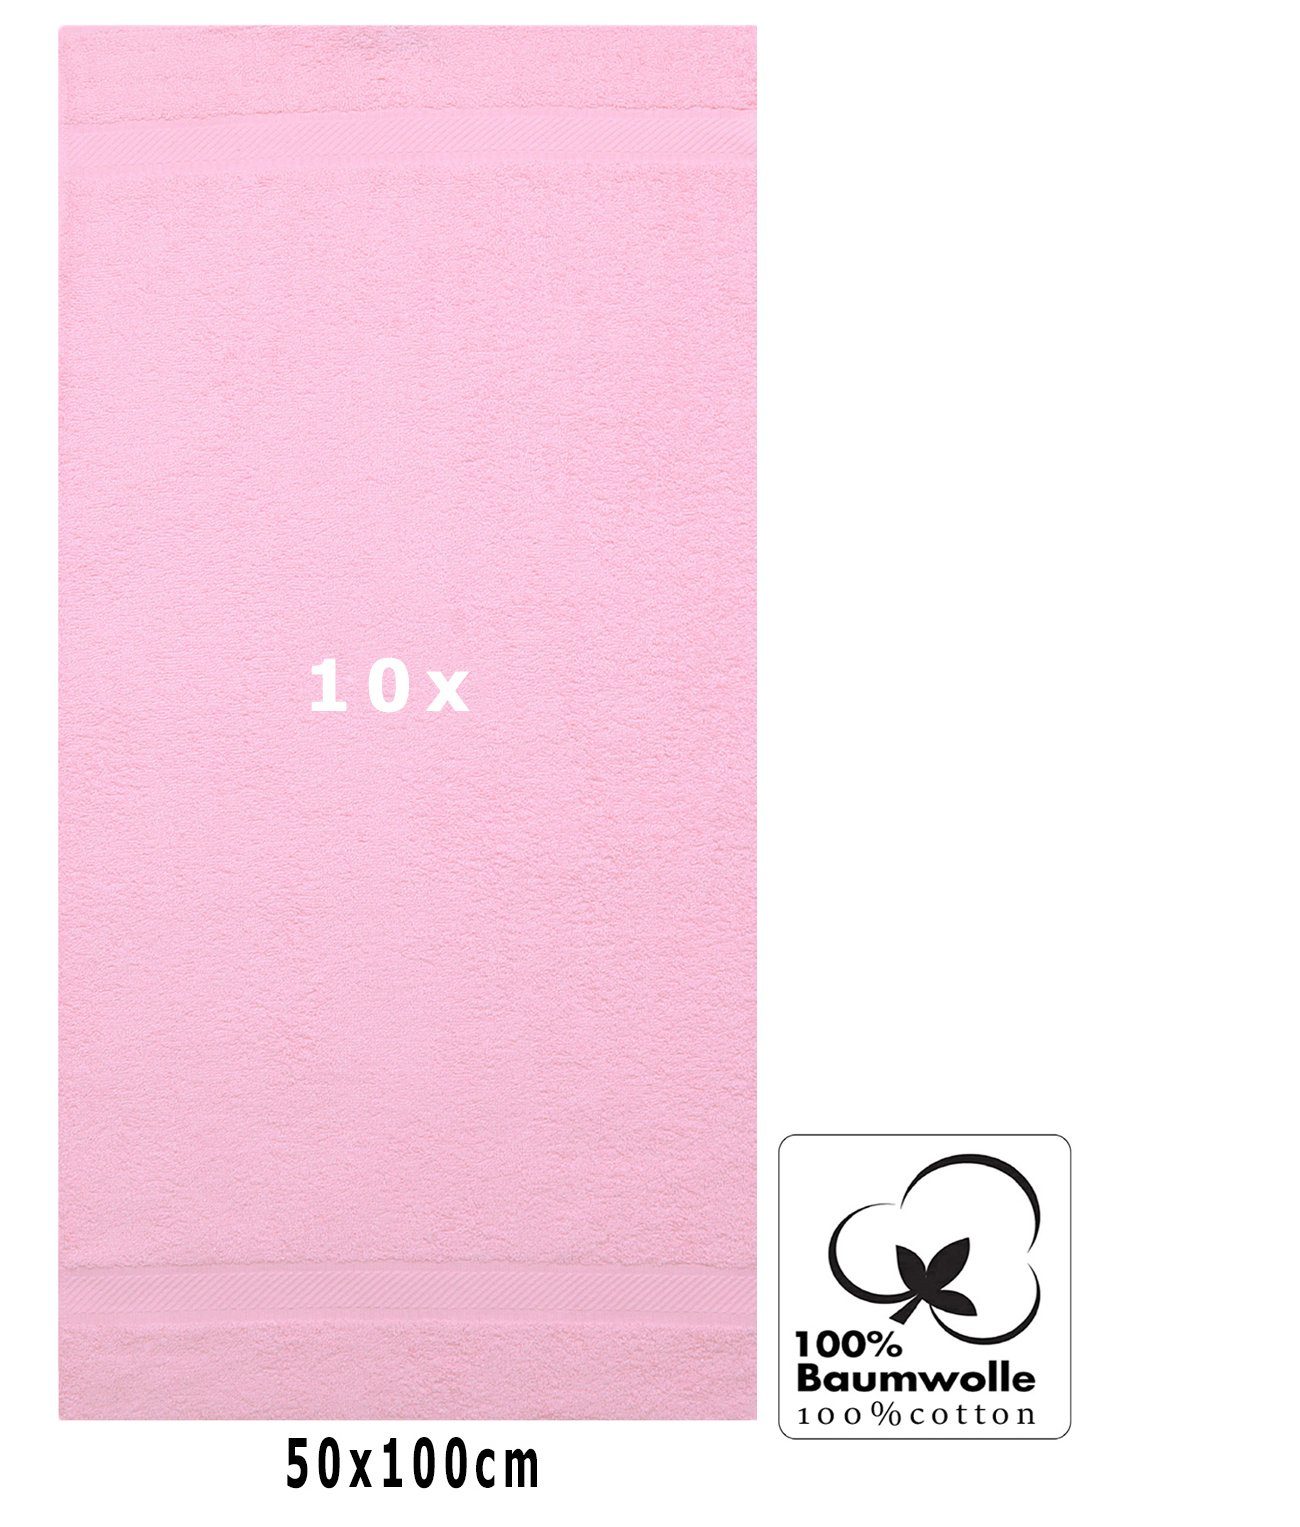 Handtuch-Set Betz Baumwolle Palermo 10 Stück Rosé, 100% Farbe Handtücher 50x100cm